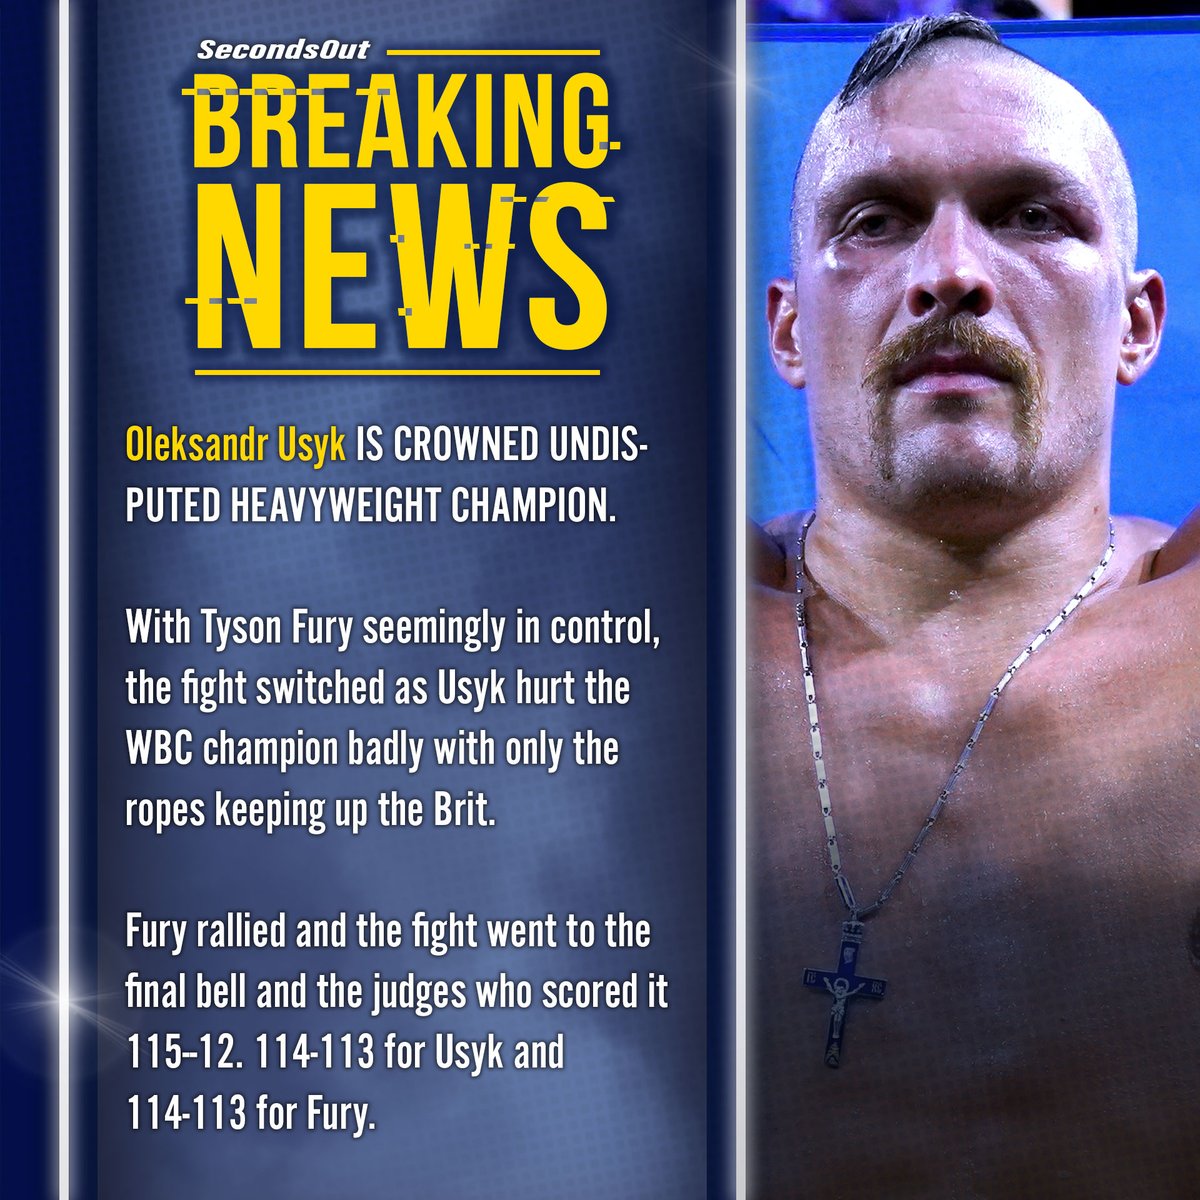 👑 @usykaa is THE NEW UNDISPUTED HEAVYWEIGHT CHAMPION! #Boxing #FuryUsyk